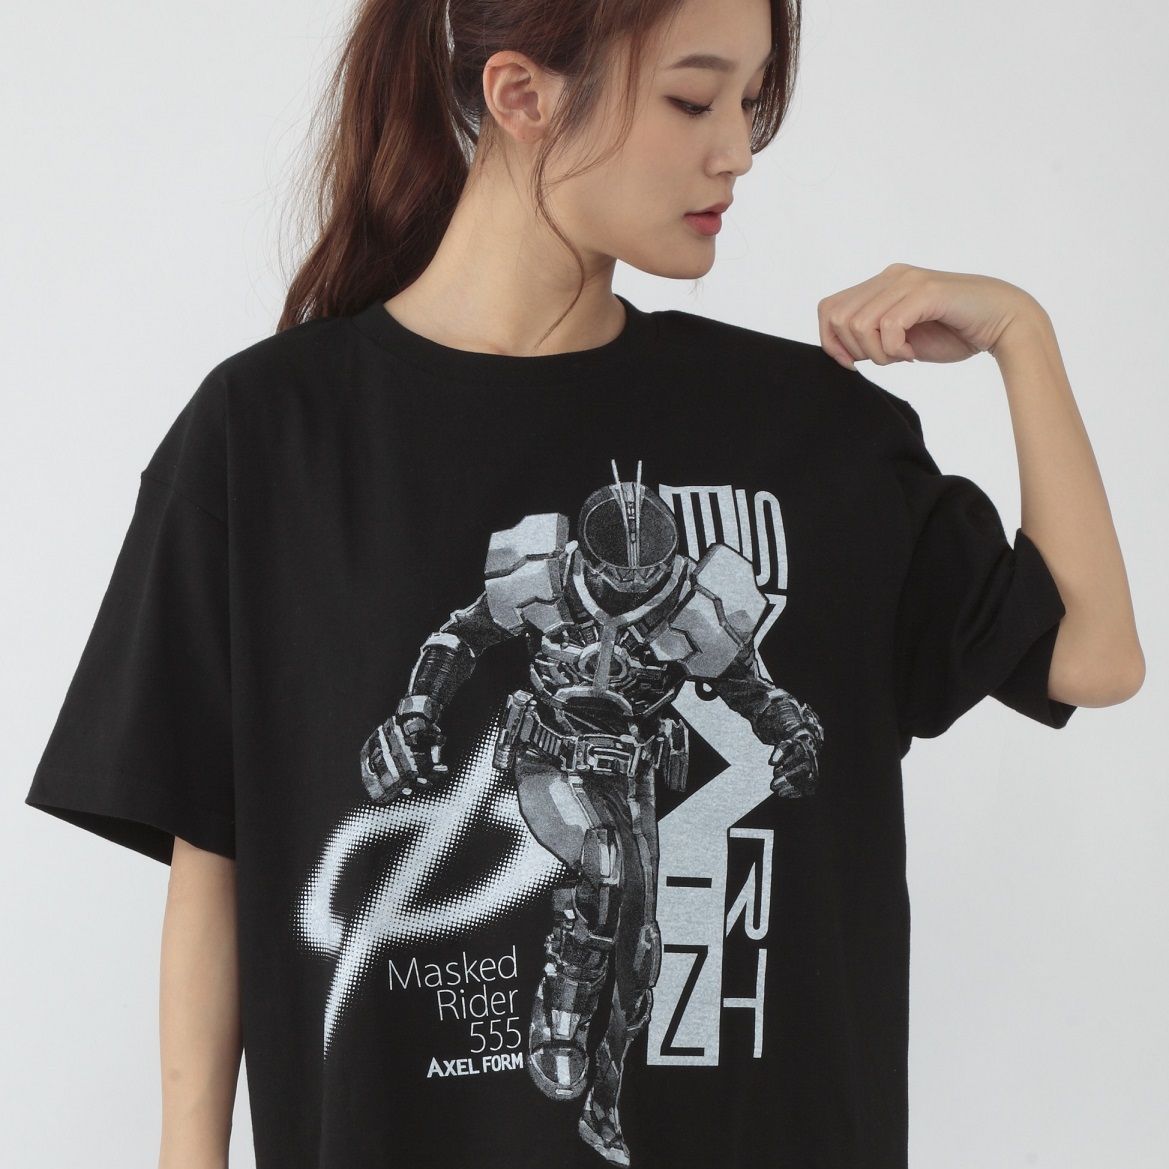 Sugahara Yoshihito Project Kamen Rider 555 Accelerator Form Tshirt